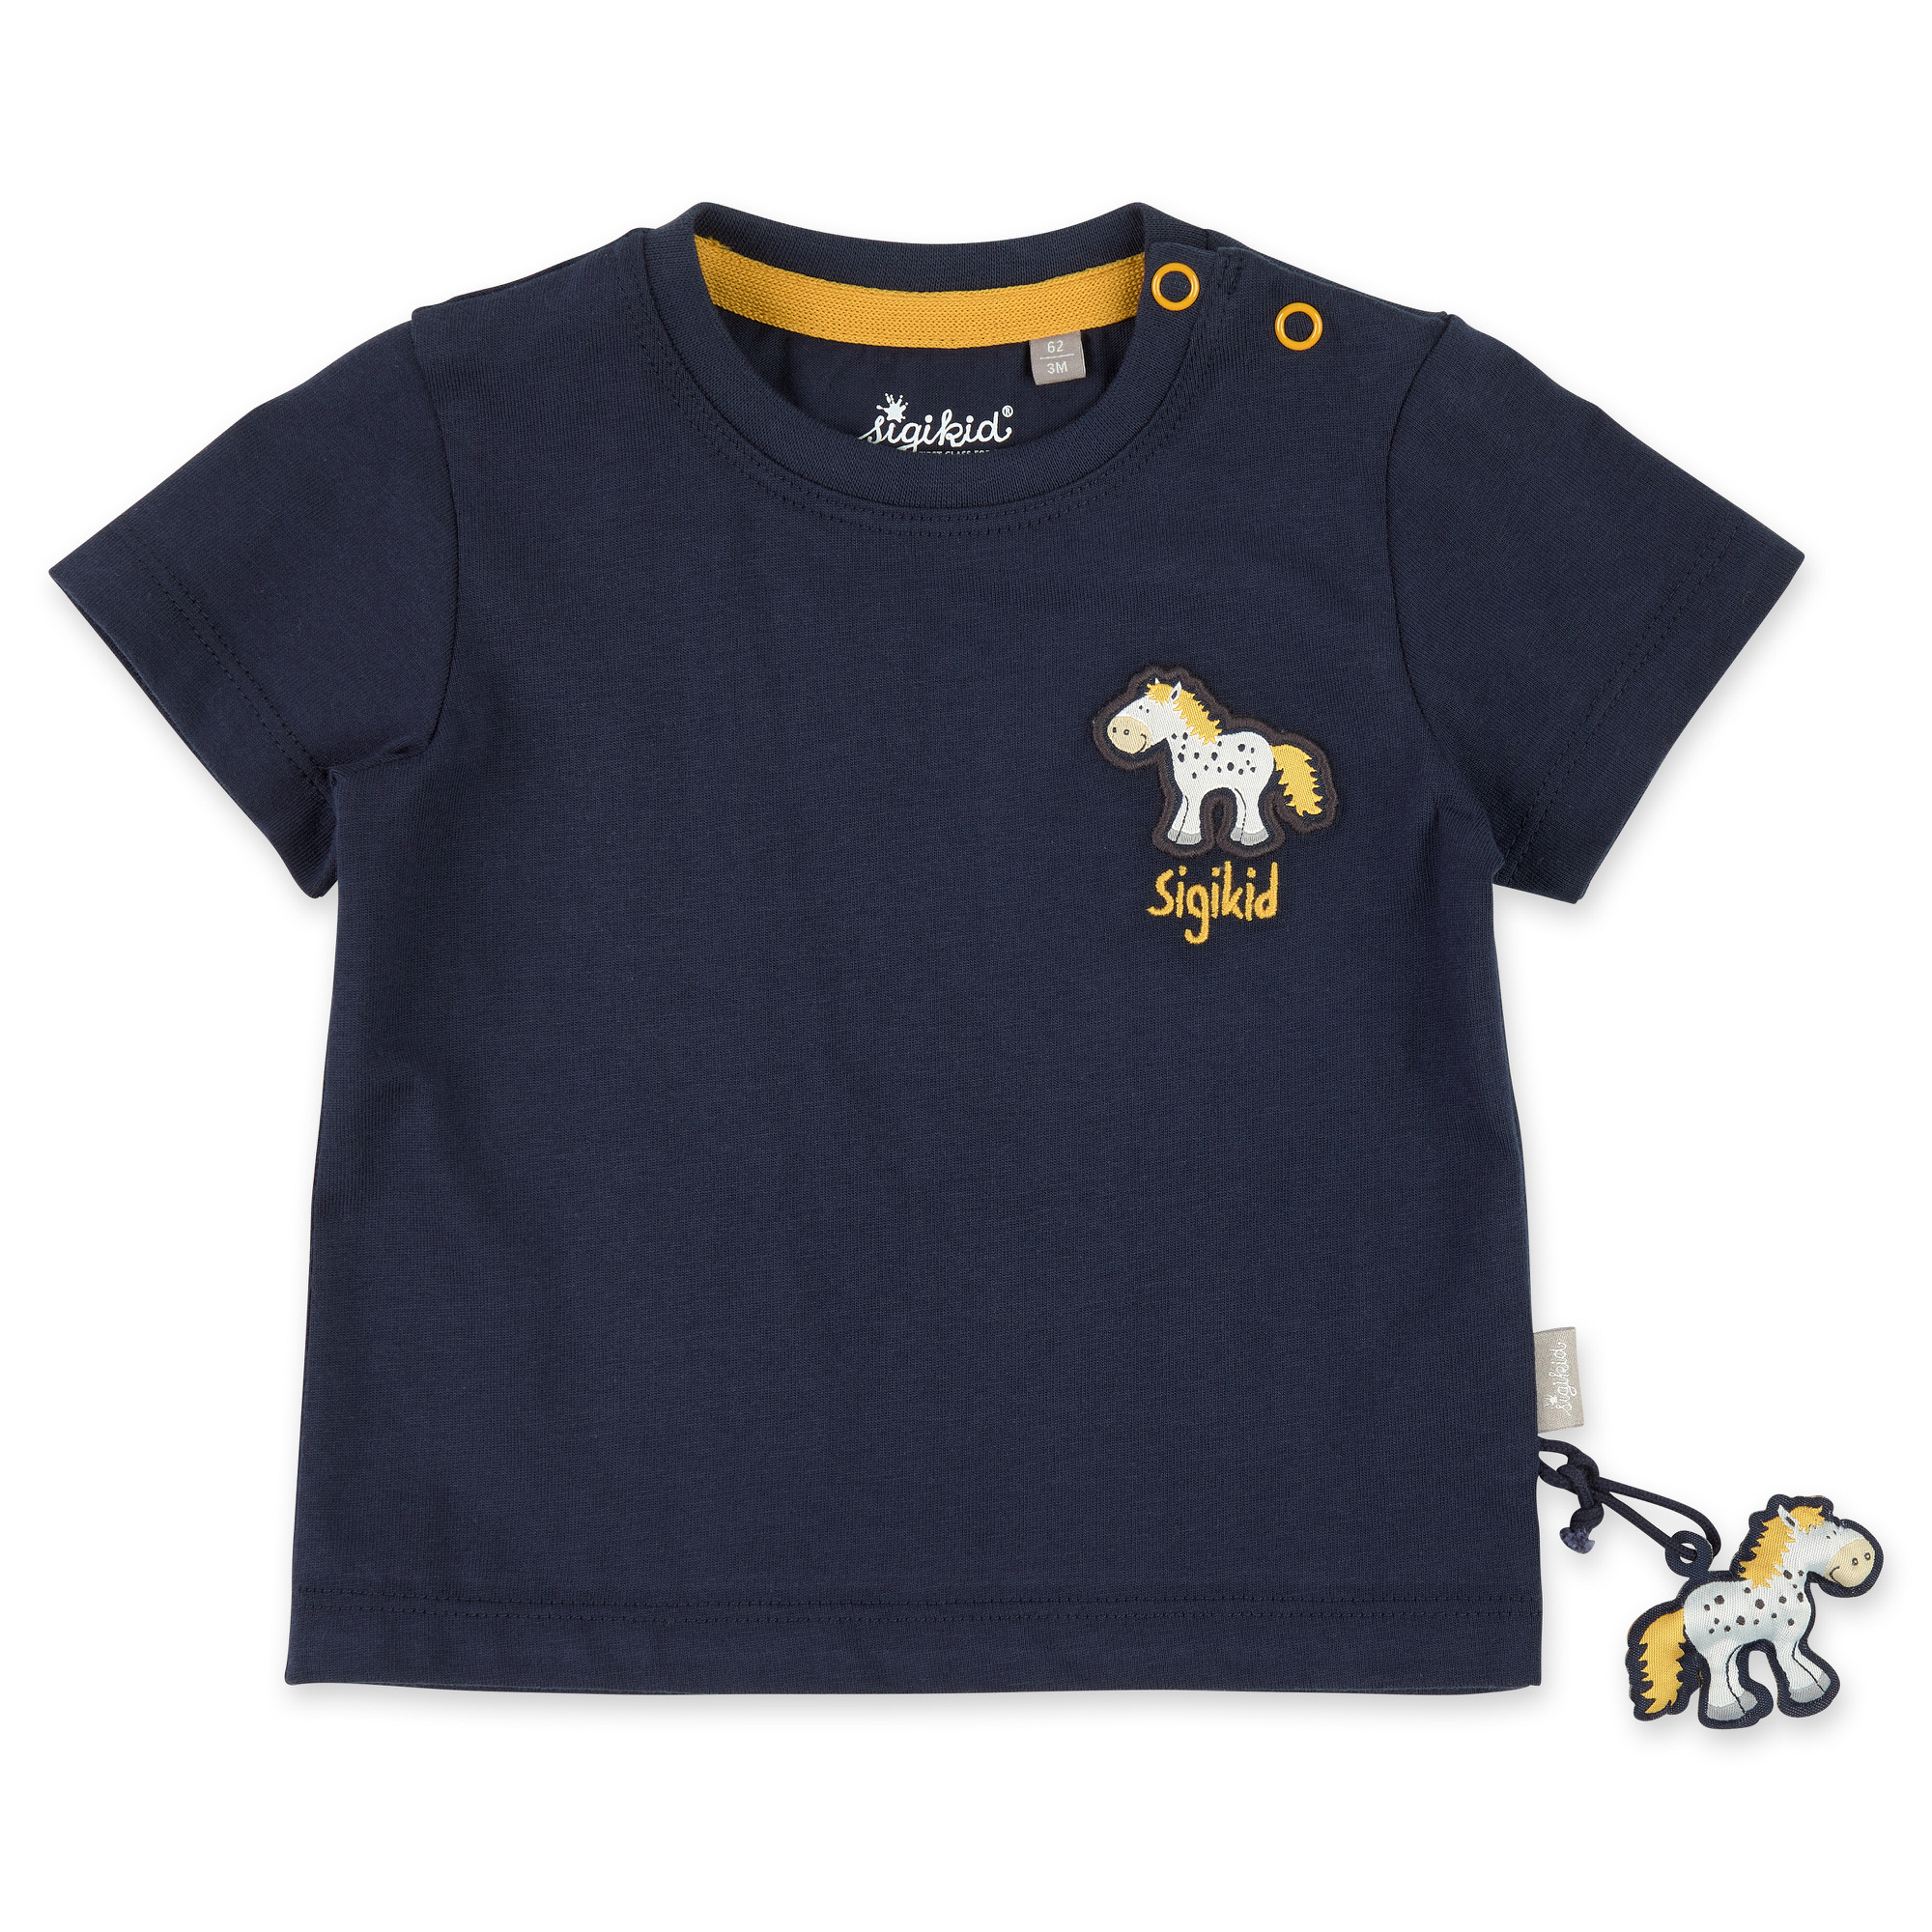 Dunkelblaues Baby T-Shirt mit Pony Motiv